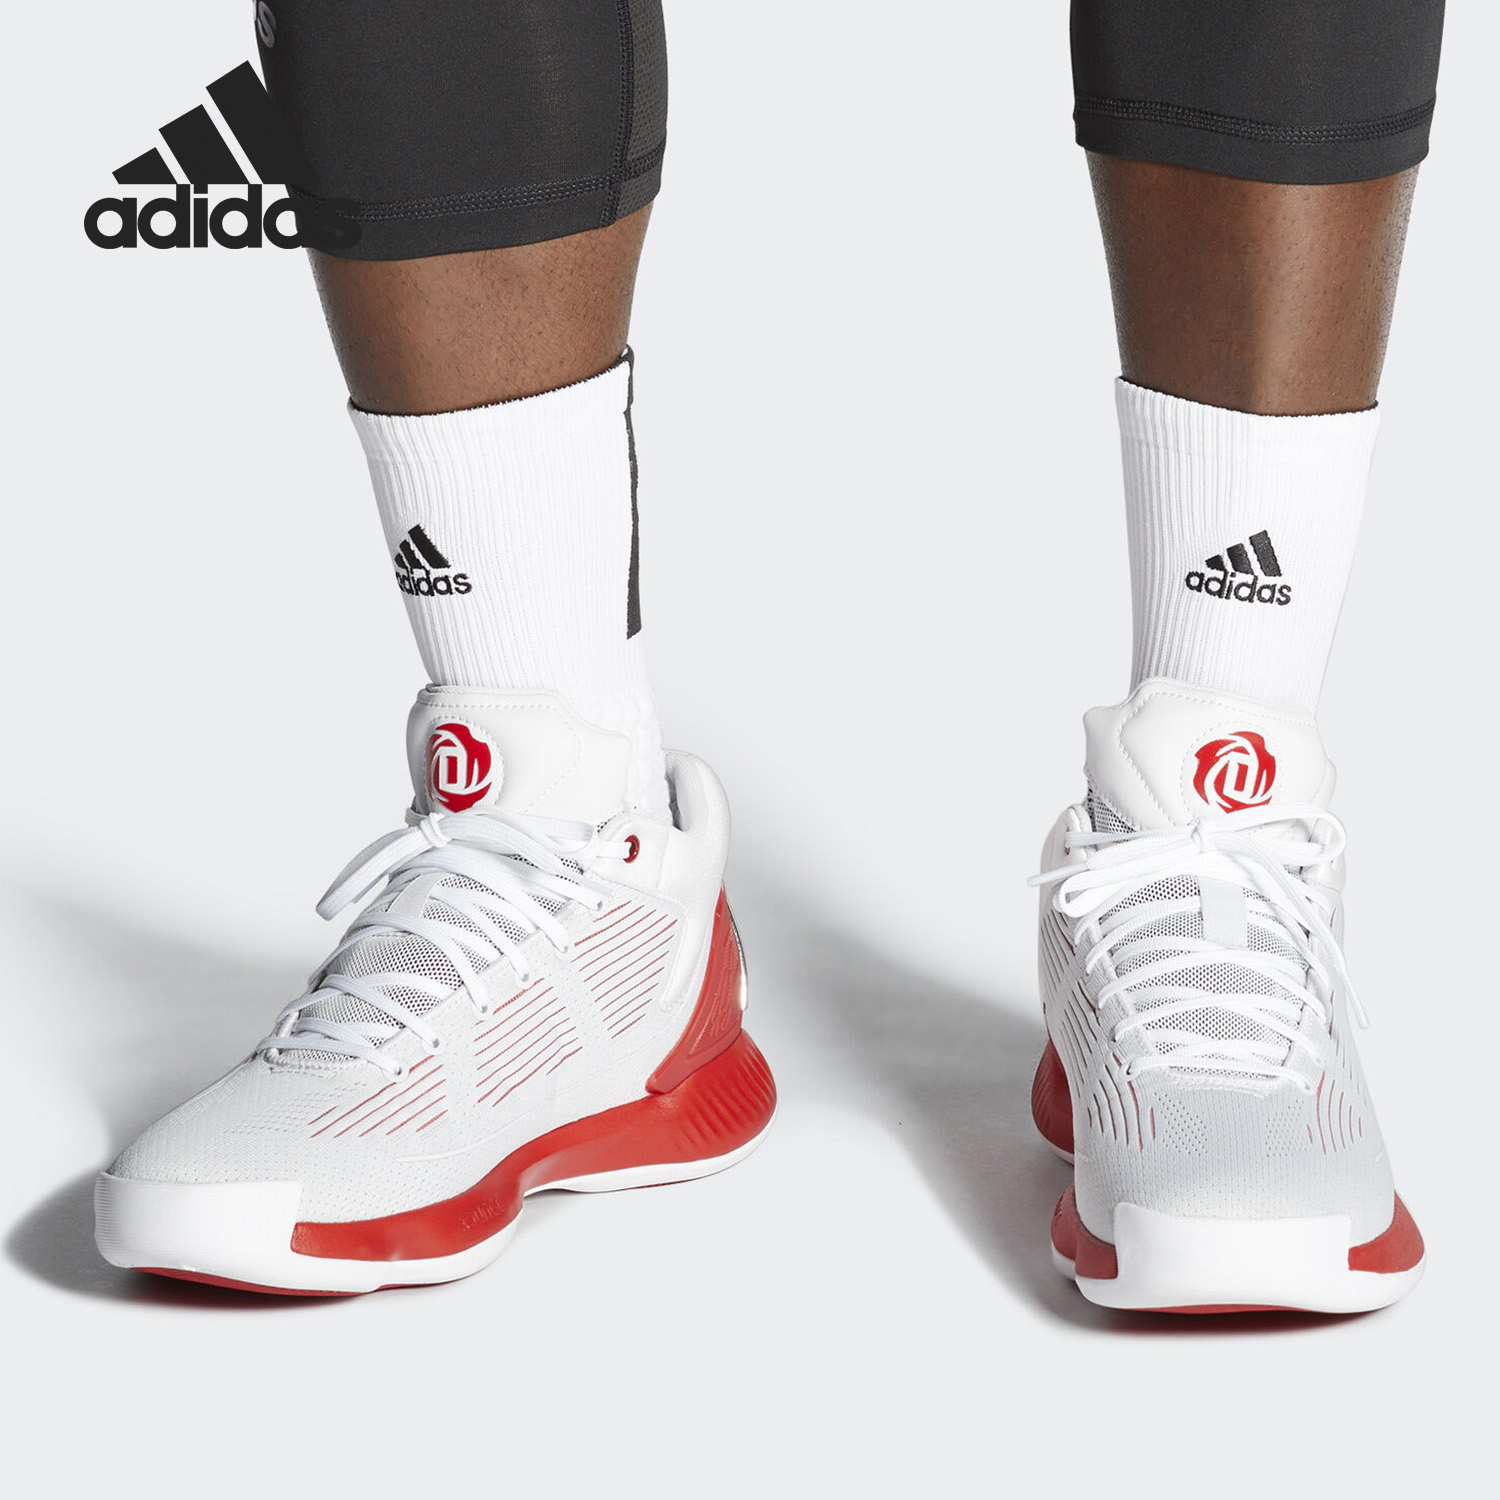 Adidas/阿迪达斯正品 D Rose 10 罗斯10 代男子实战篮球鞋 EH2100 运动鞋new 篮球鞋 原图主图